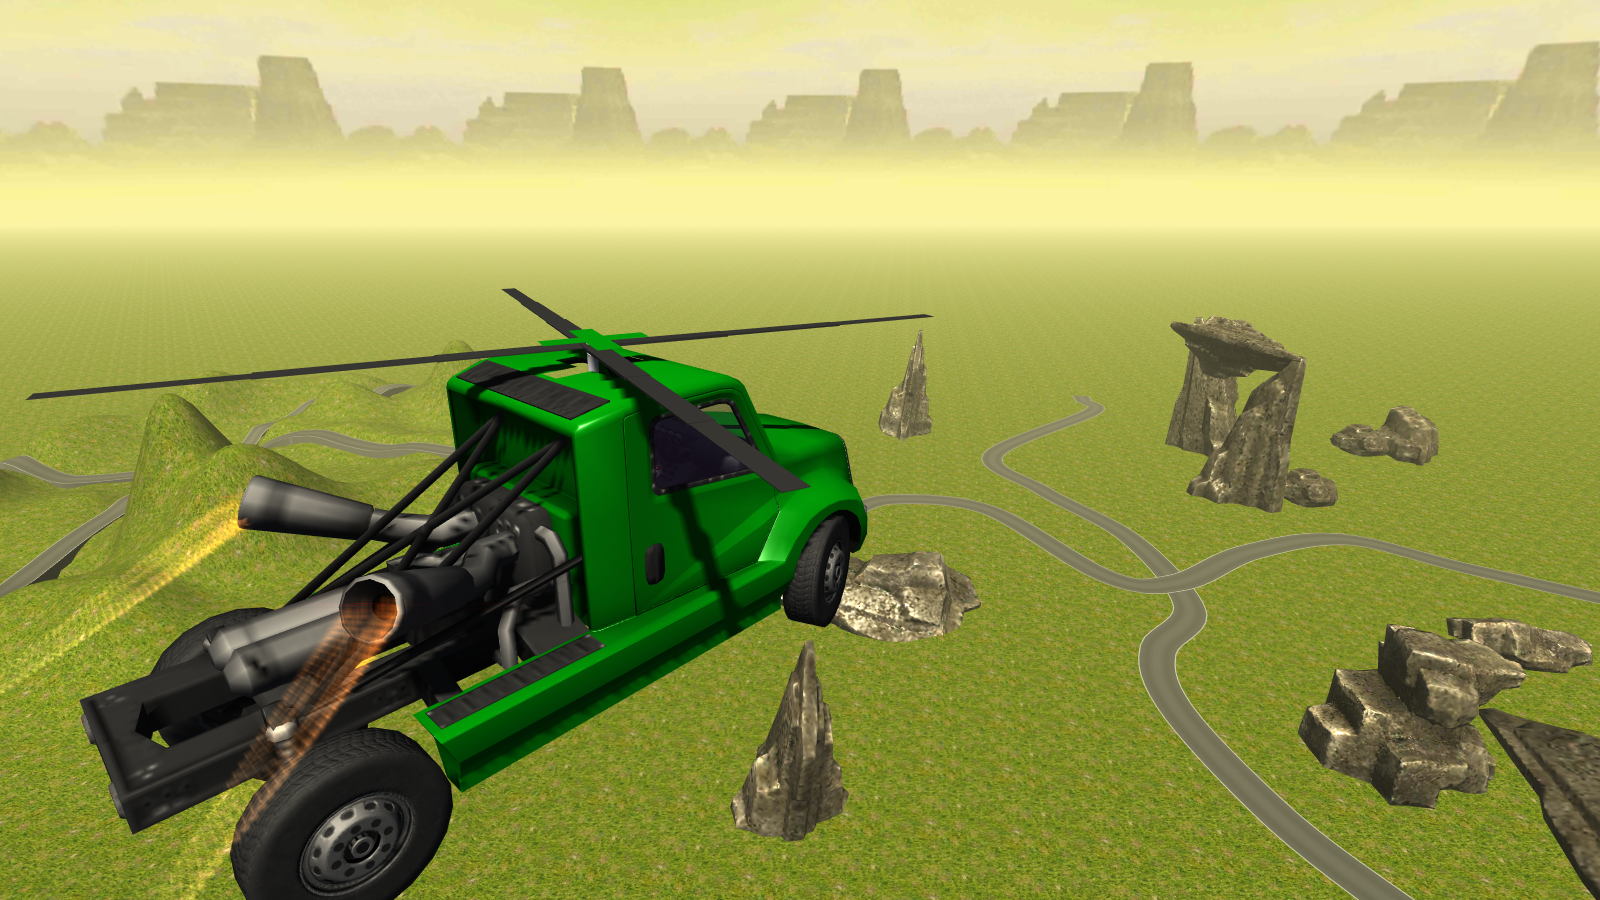 Screenshot 1 of Fliegender Hubschrauber-LKW-Flug 1